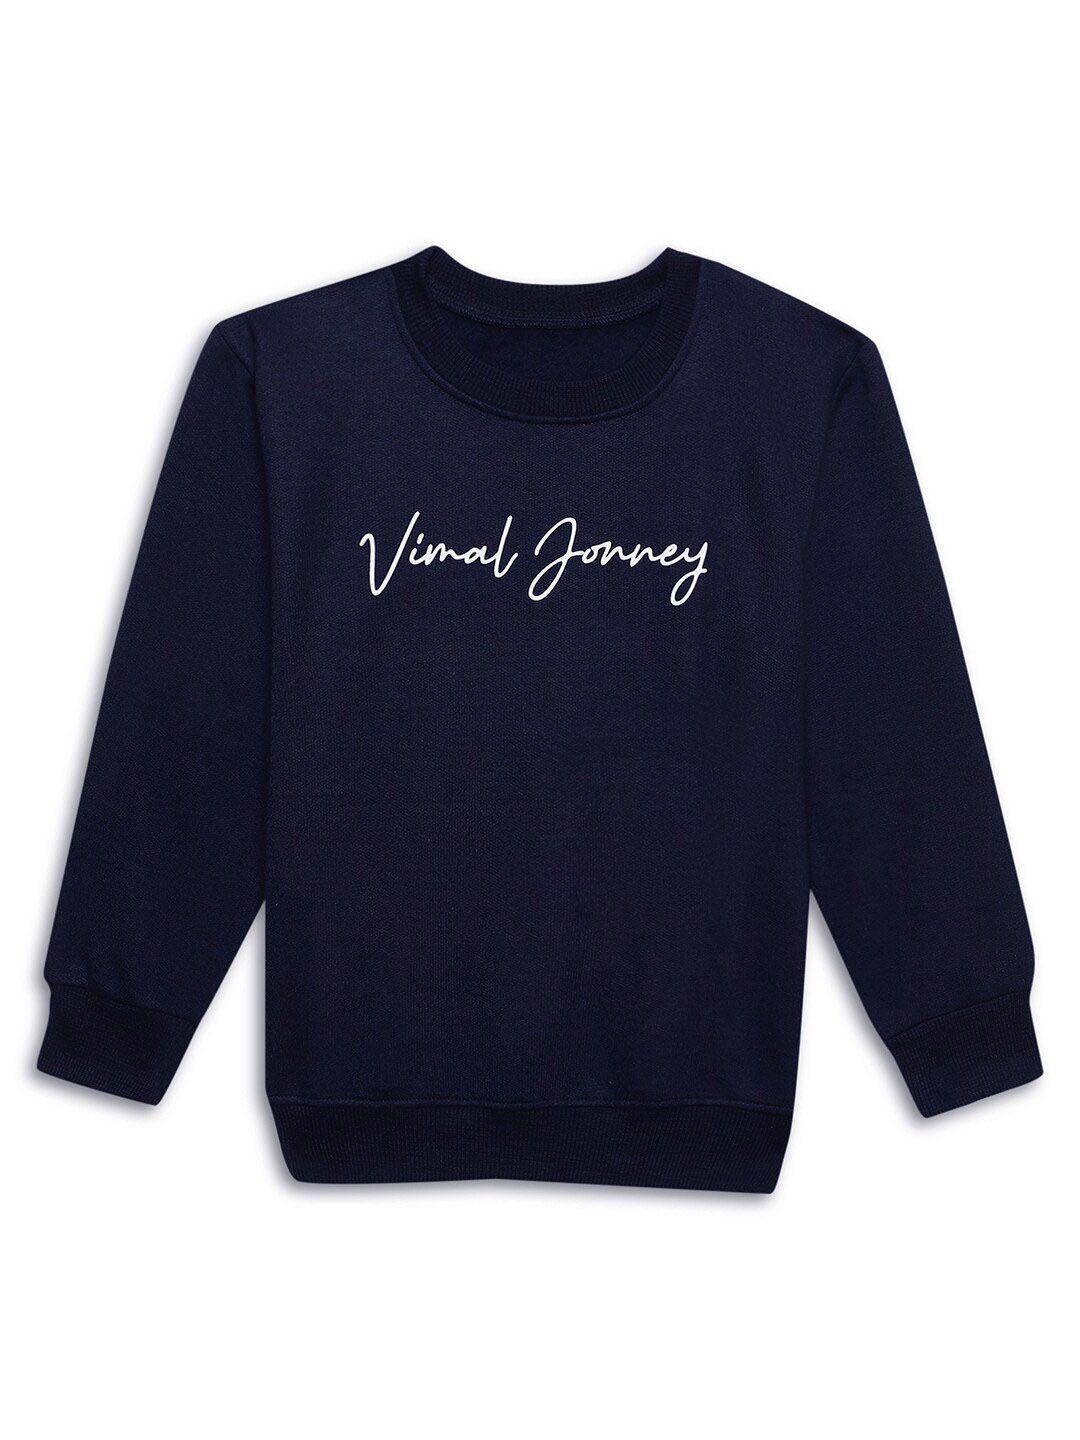 vimal jonney unisex kids navy blue printed sweatshirt